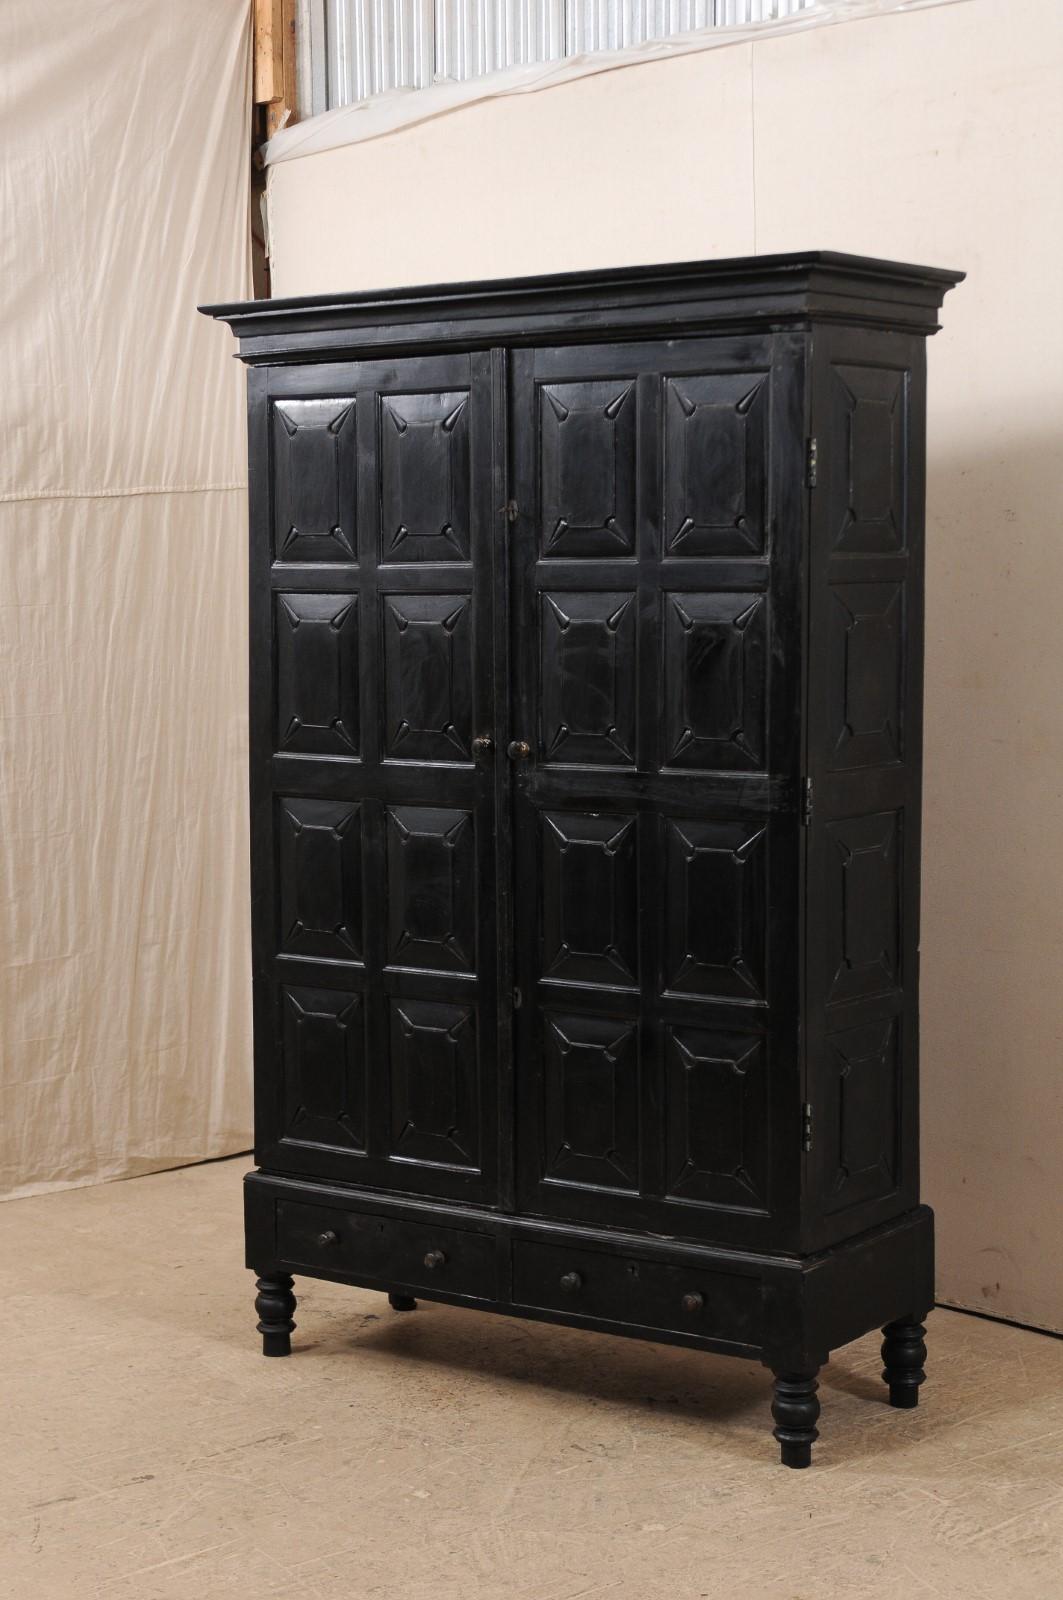 20th century wood cabinets